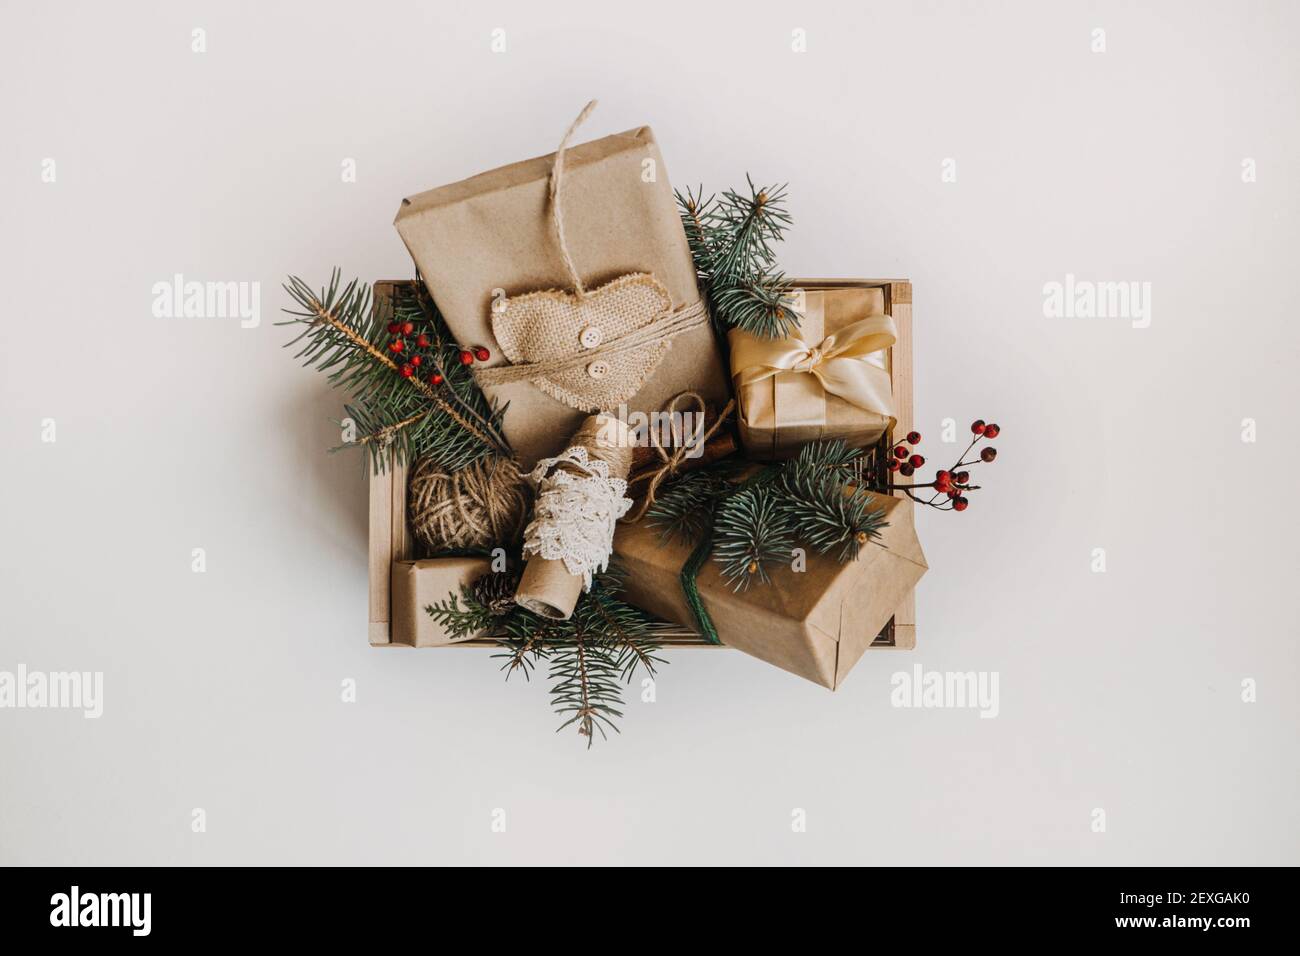 Holiday Gift Ideas. Sustainable Christmas, zero waste gifts ...